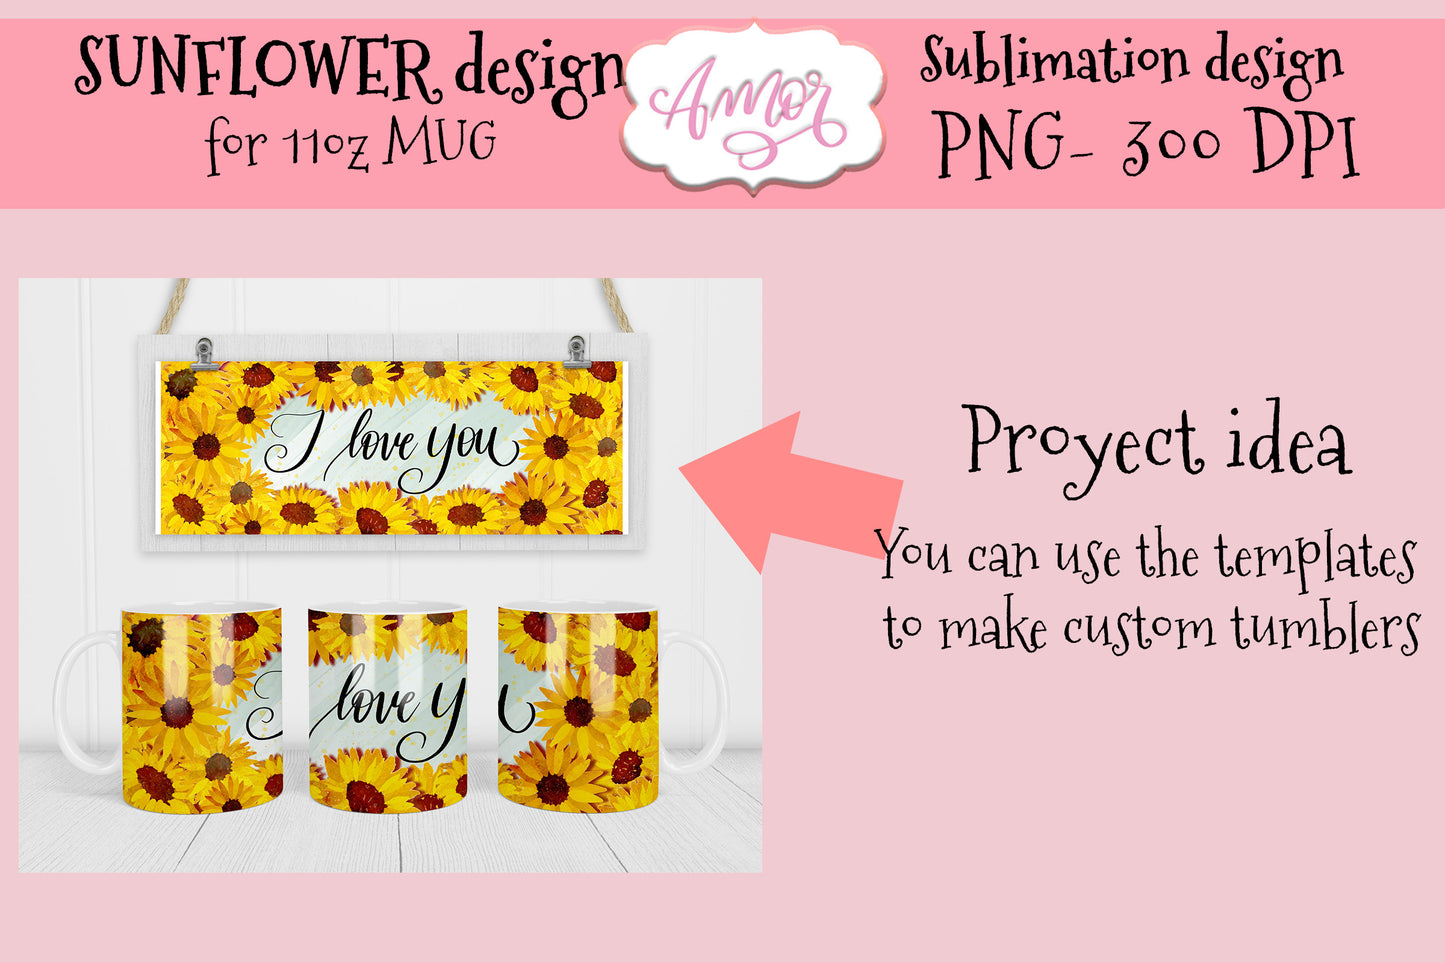 Sunflowers design for 11oz mug sublimation